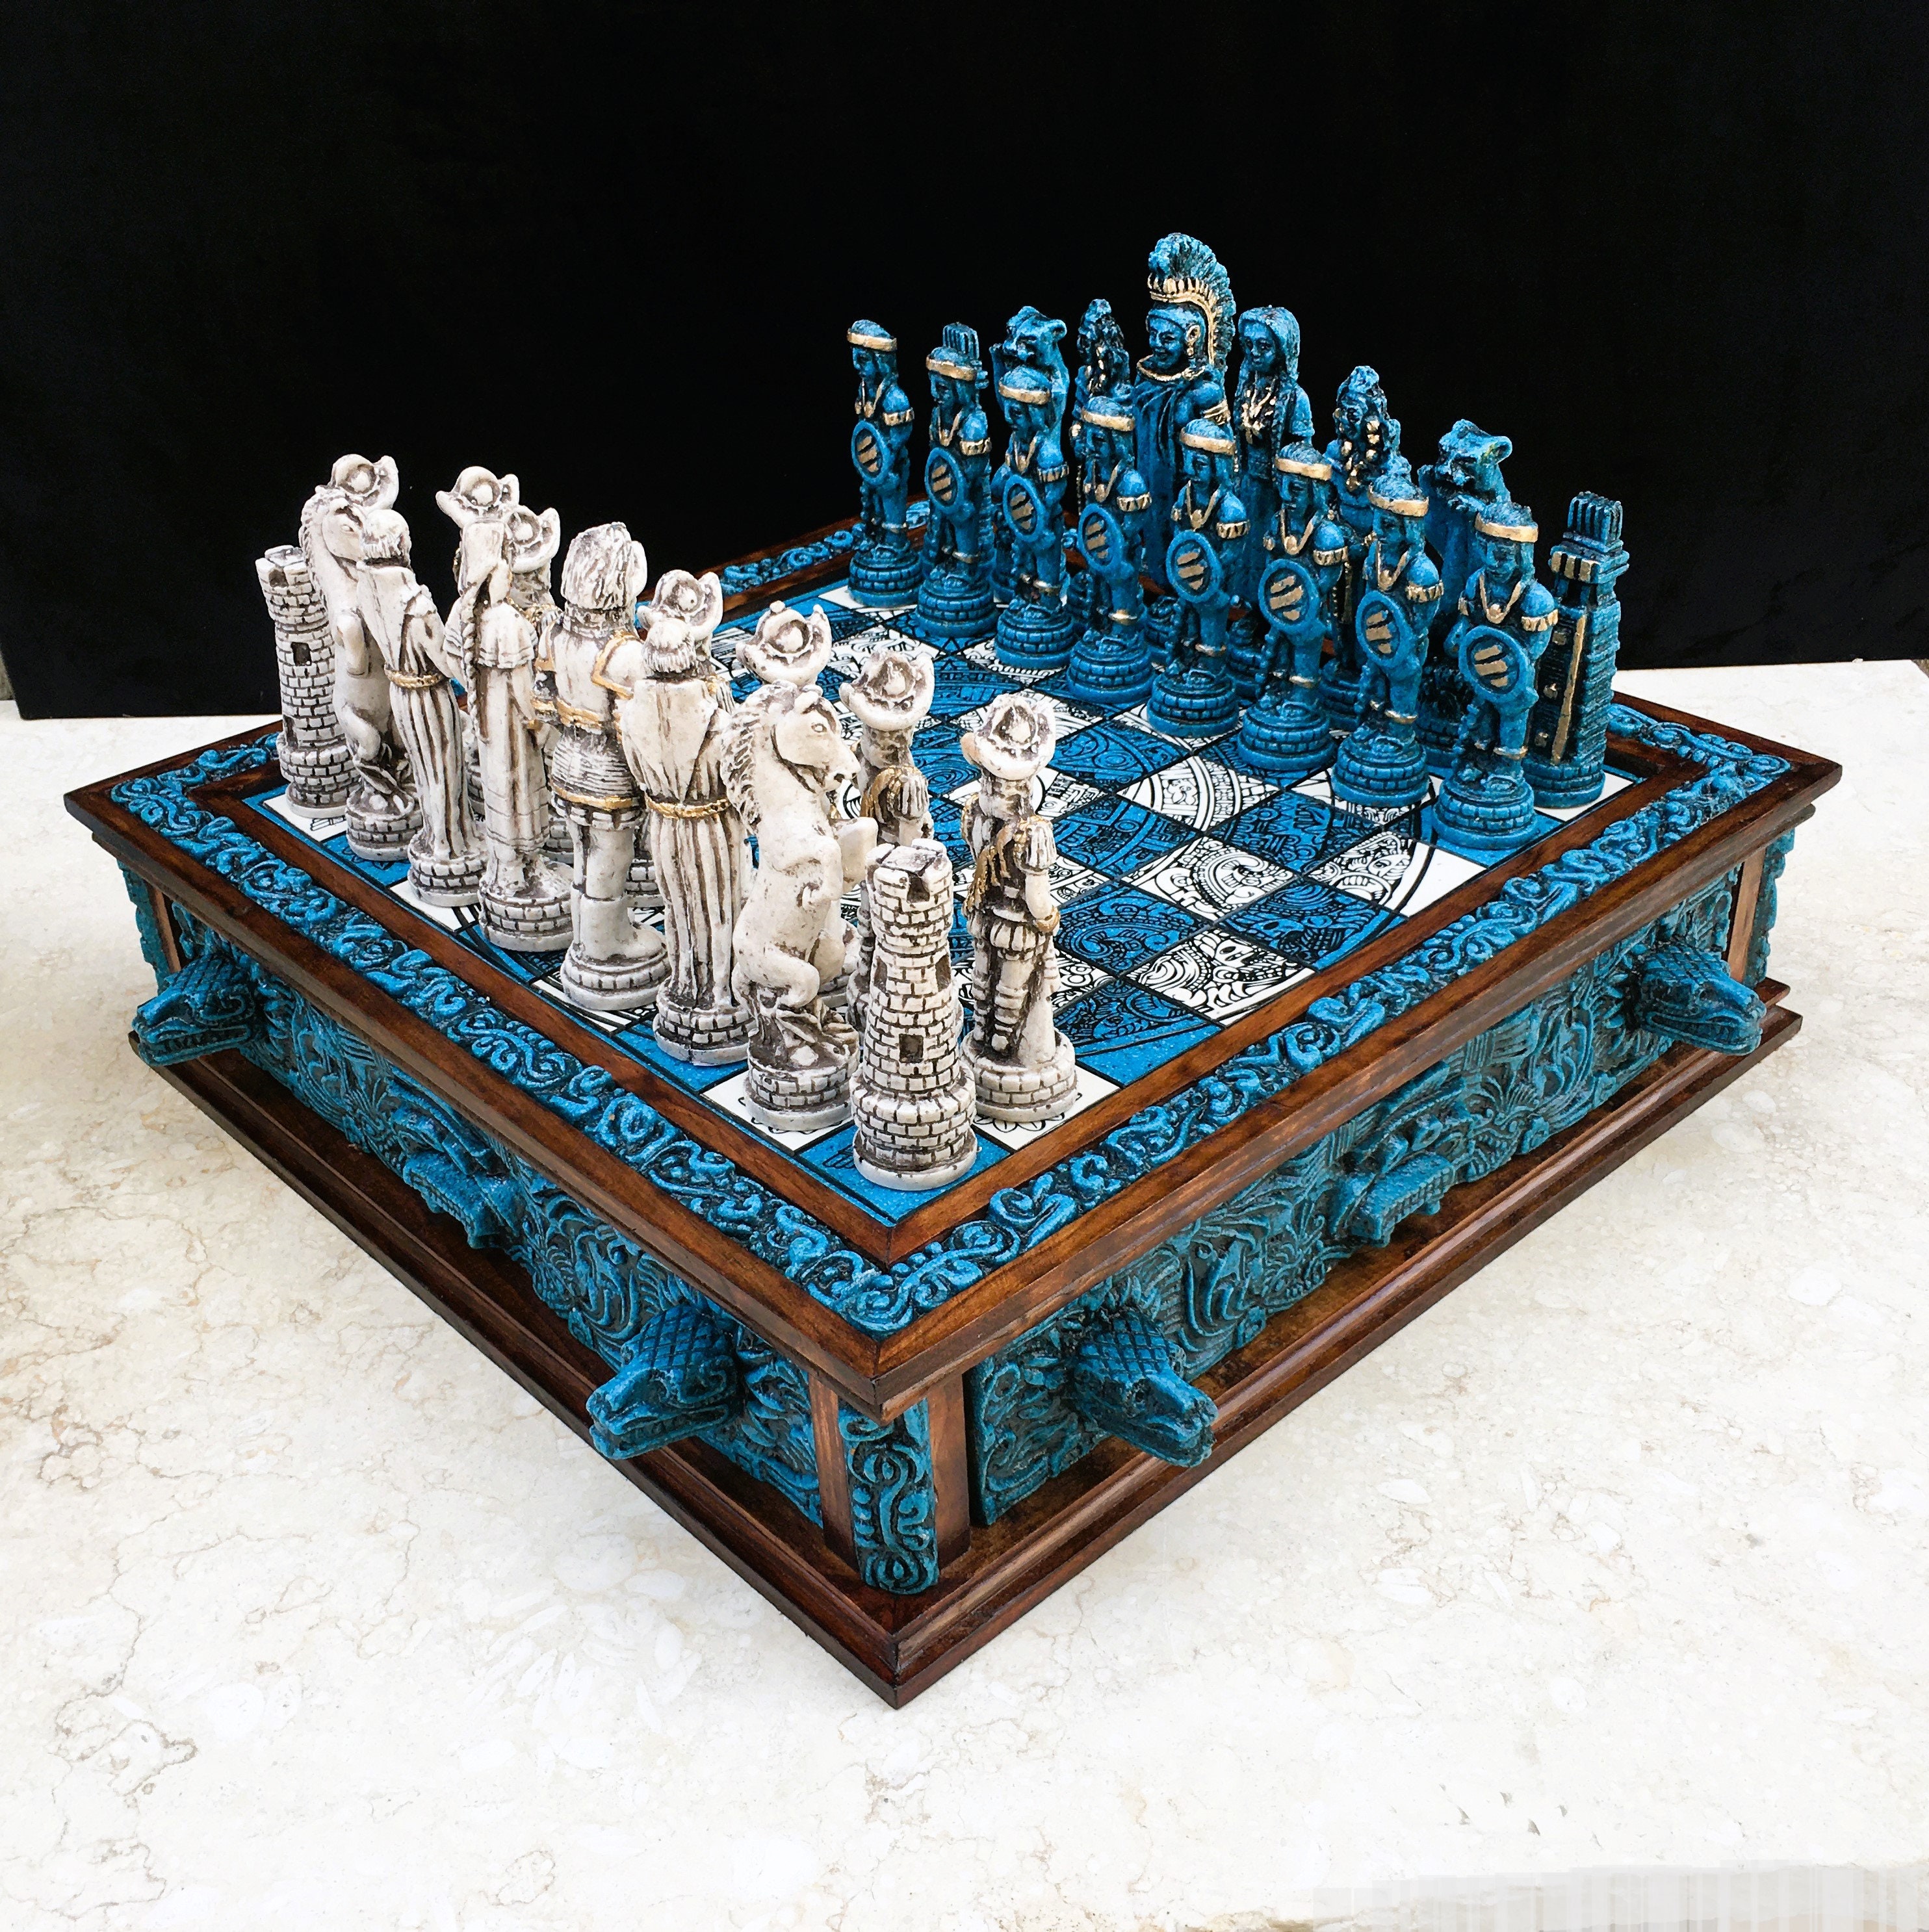 Resin Chess Pieces International Chess Figurines Retro Home Decor